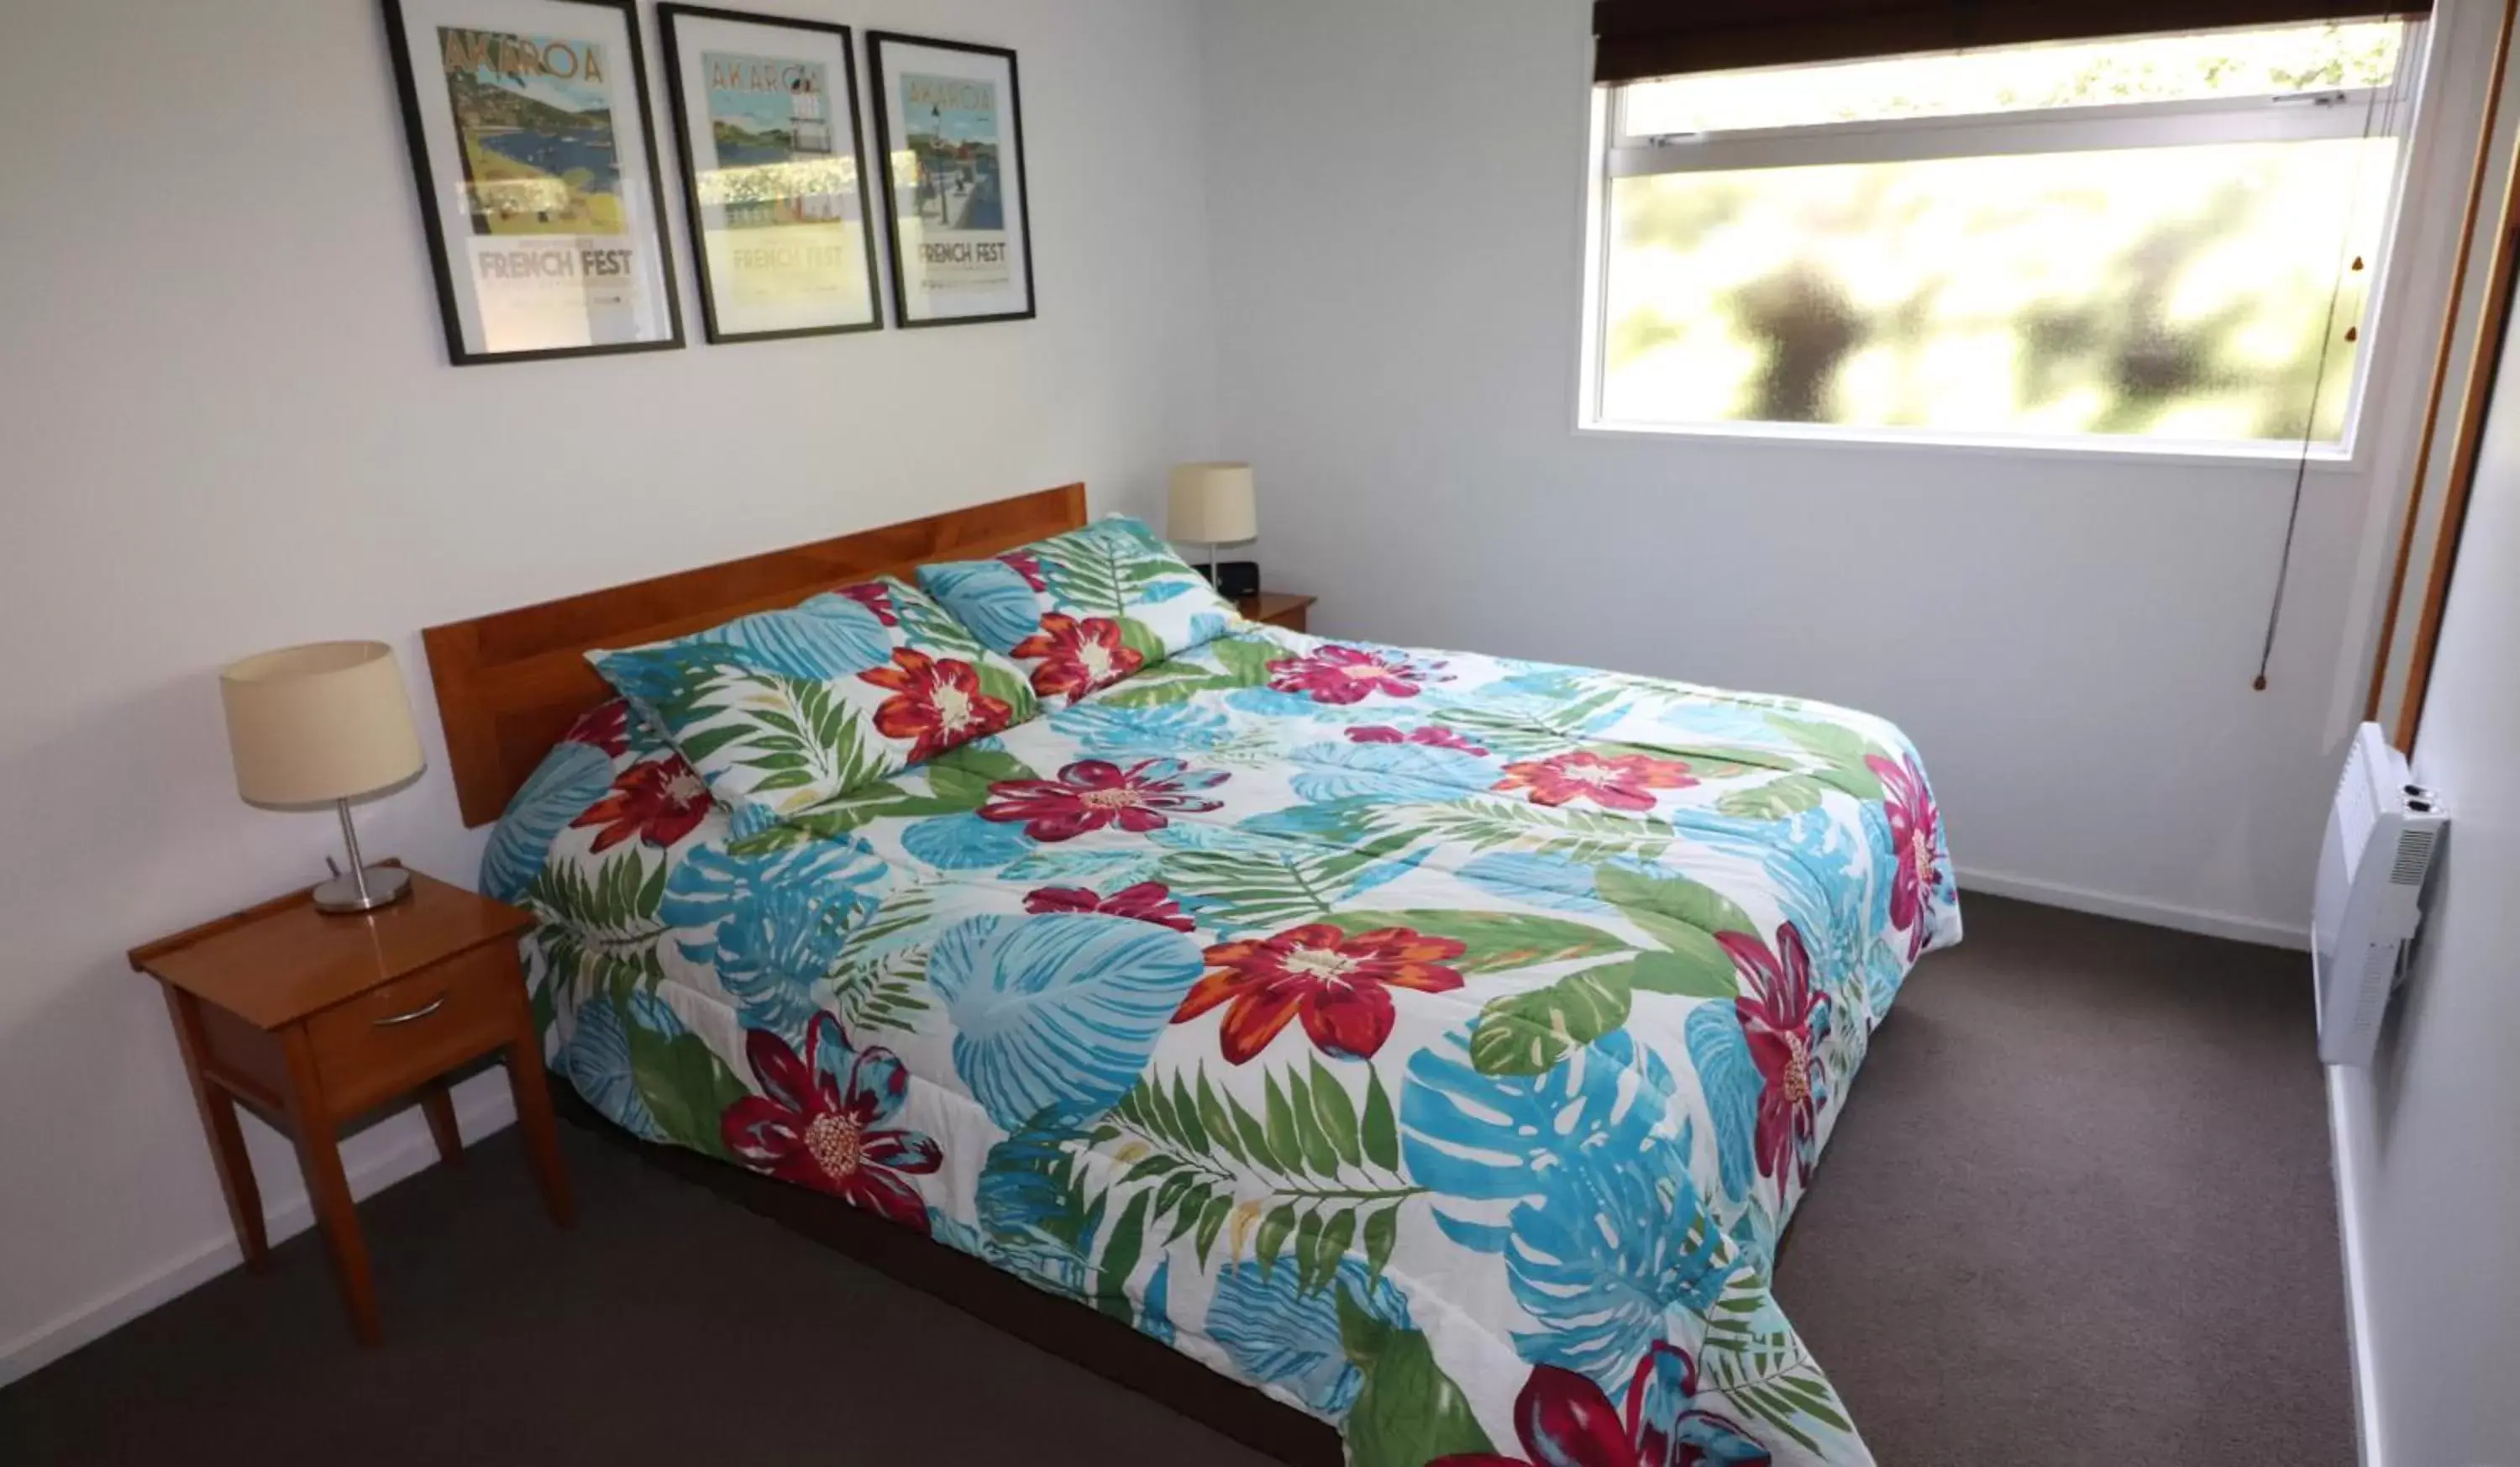 Bed in Sumner Bay Motel